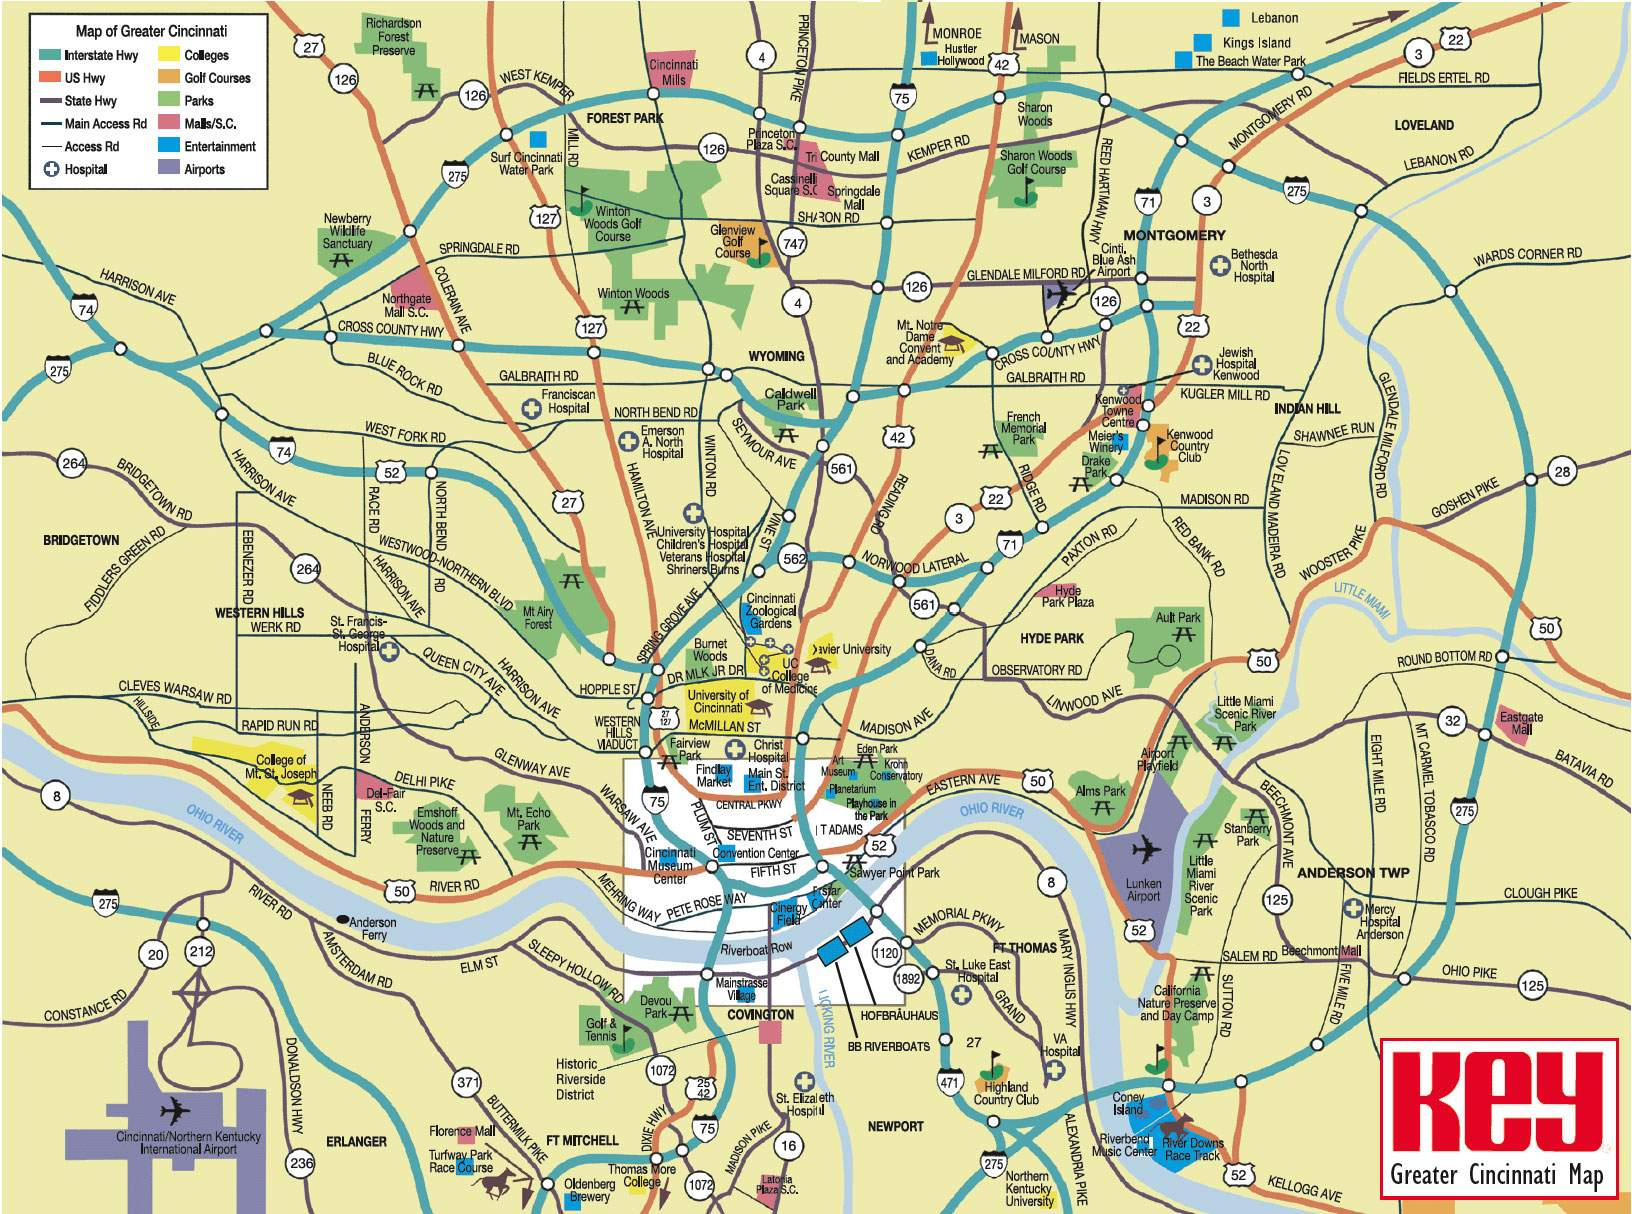 Large Cincinnati Maps For Free Download And Print | High-Resolution - Printable Cincinnati Map